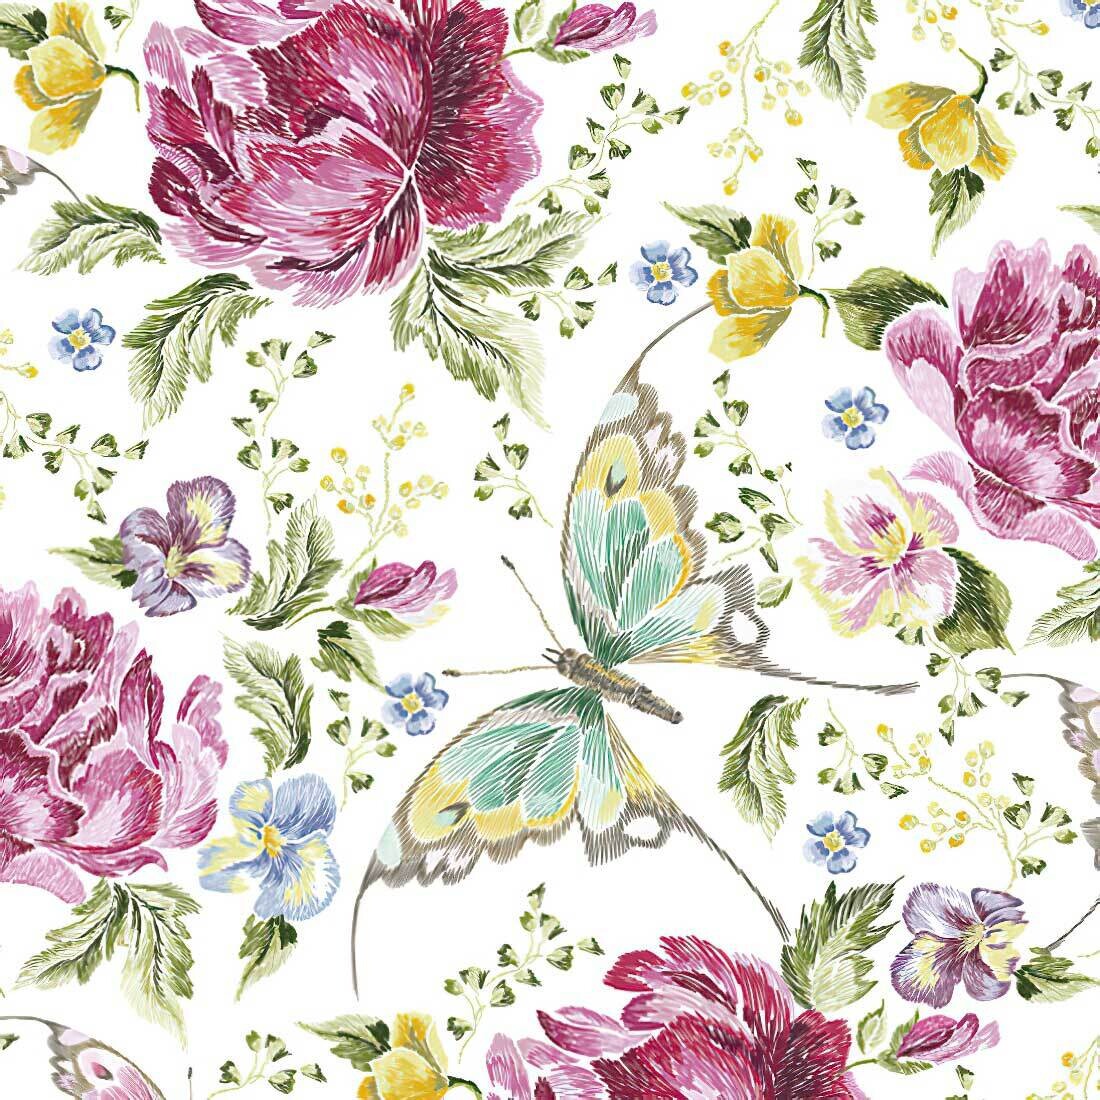 Decoupage Paper Napkins - Butterflies - Embroidery Flowers and Butterflies (1 Sheet)